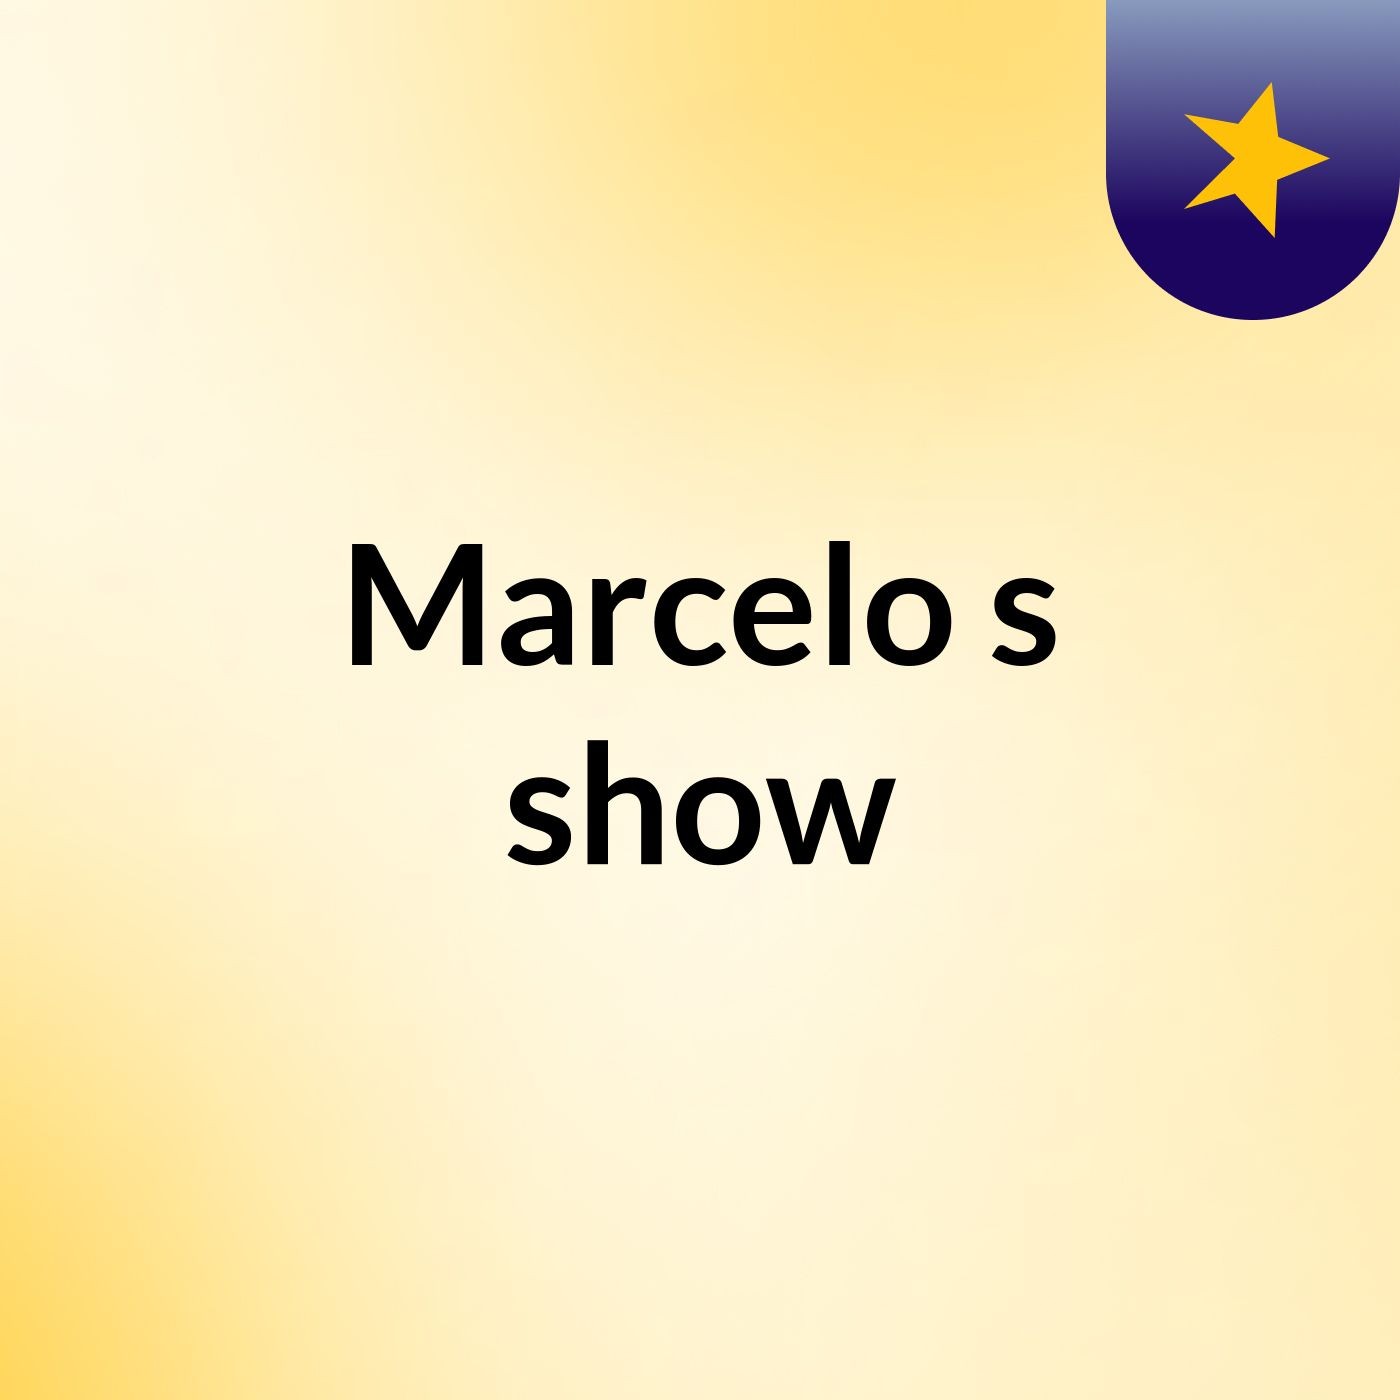 Marcelo's show